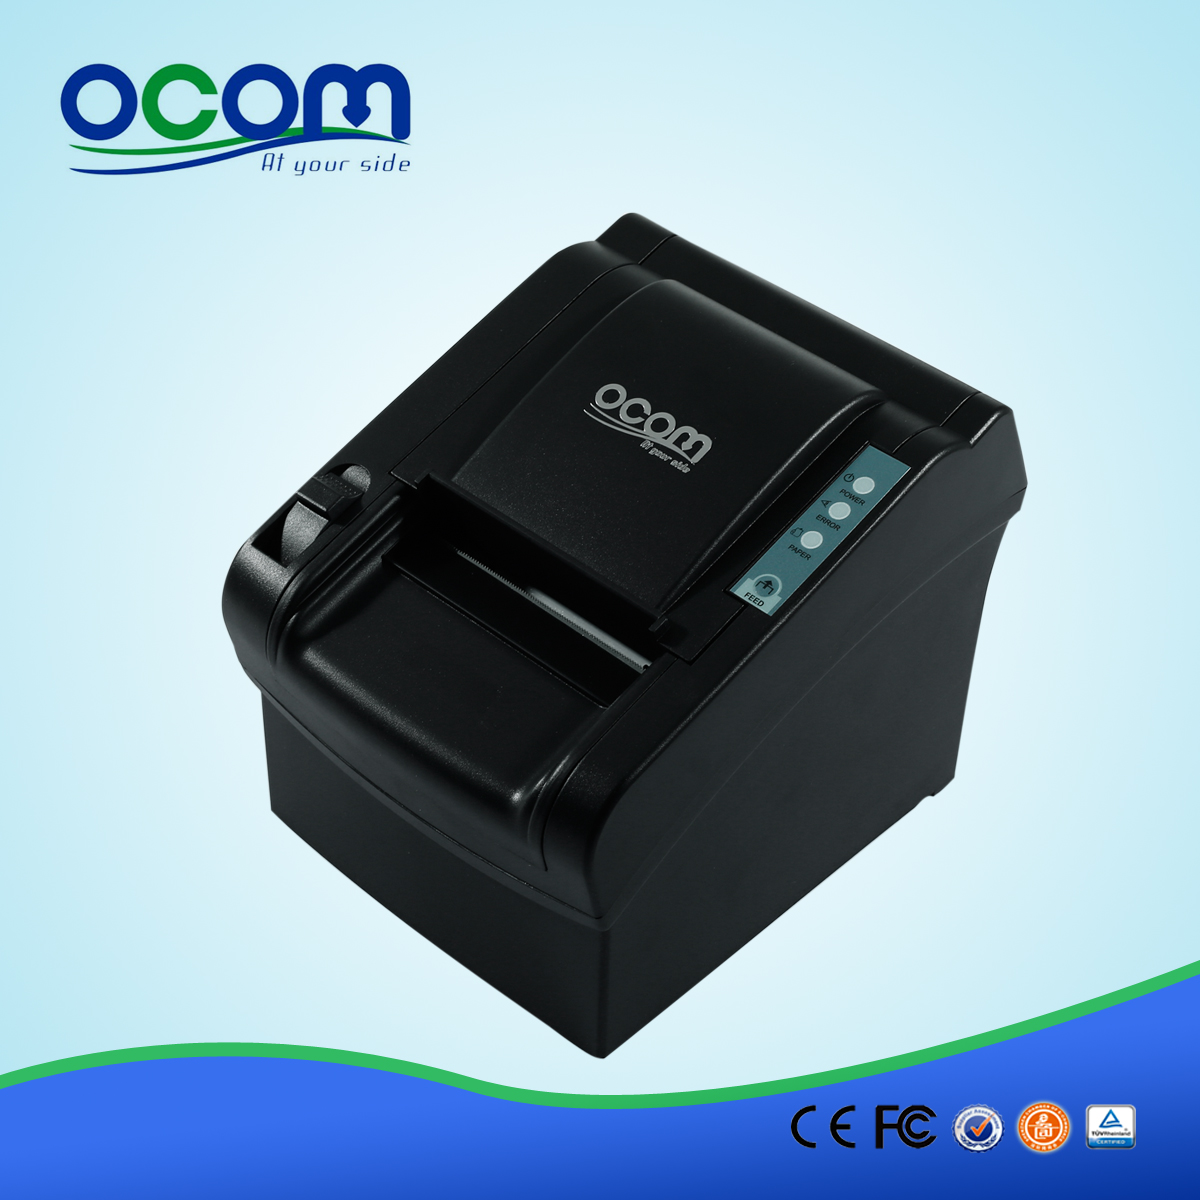 OCPP-802: on sale impressora pos recibo, 80 milímetros impressora de recibos térmica